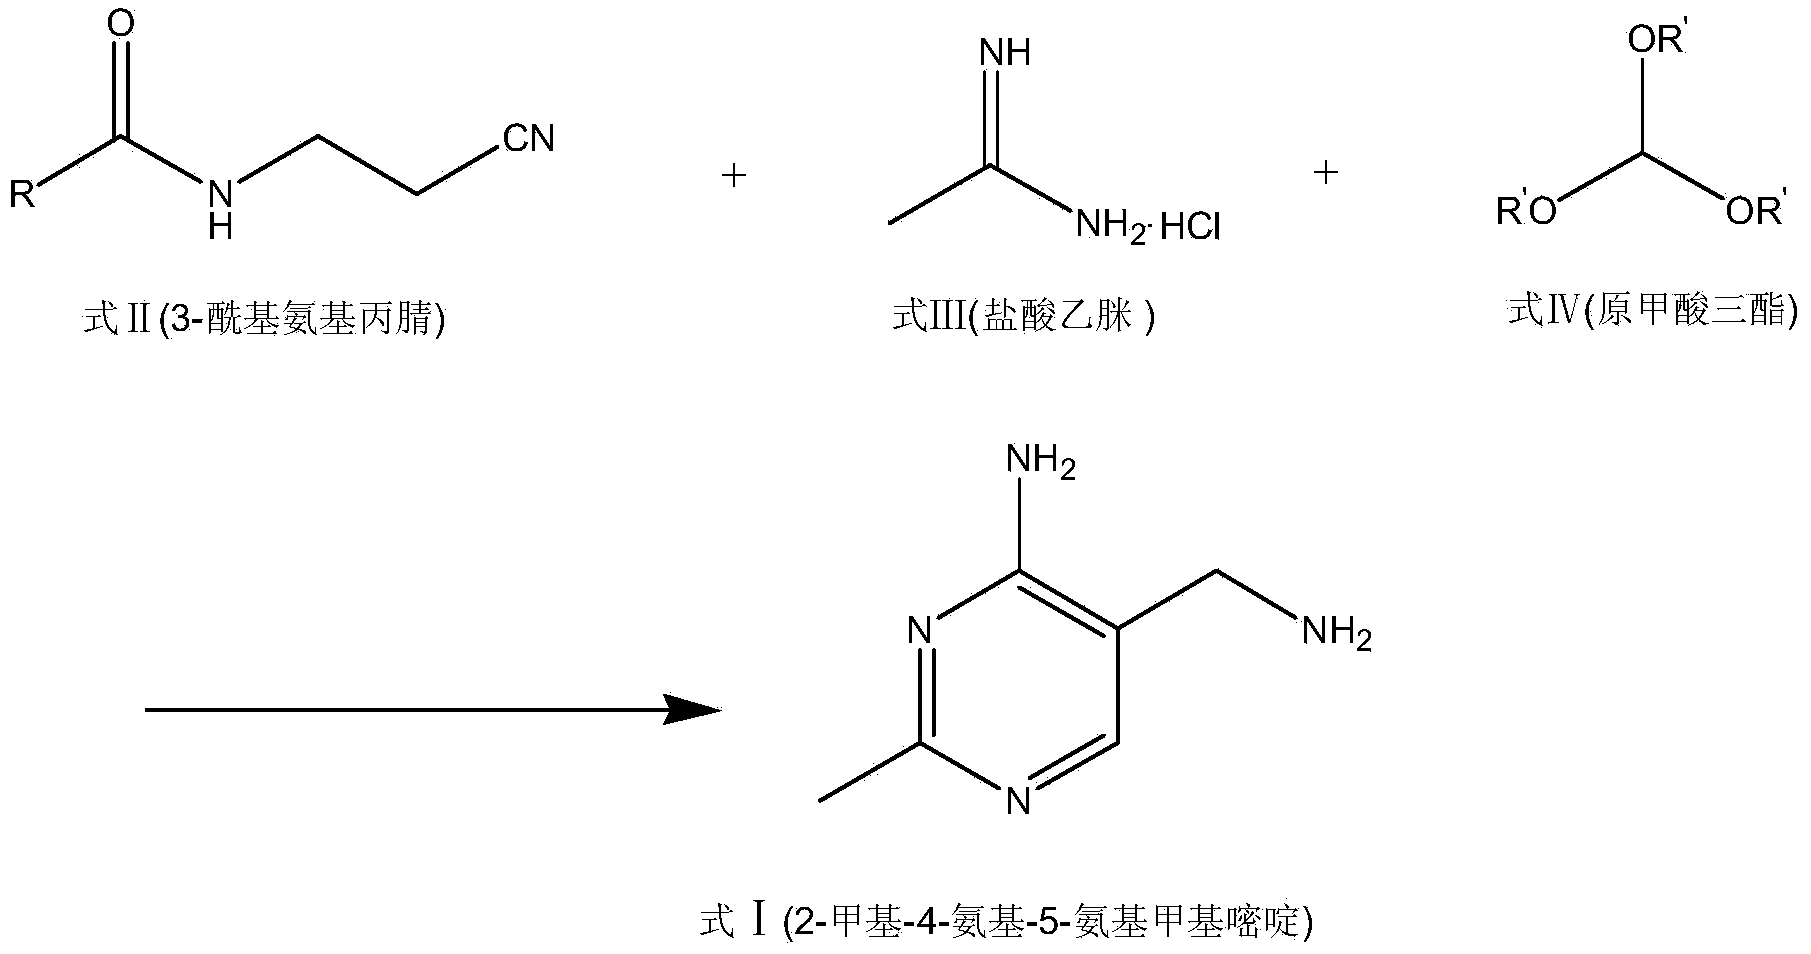 Portable synthesis method for preparing 2-methyl-4-amino-5-aminoethylpyrimidine through one-step cyclization reaction